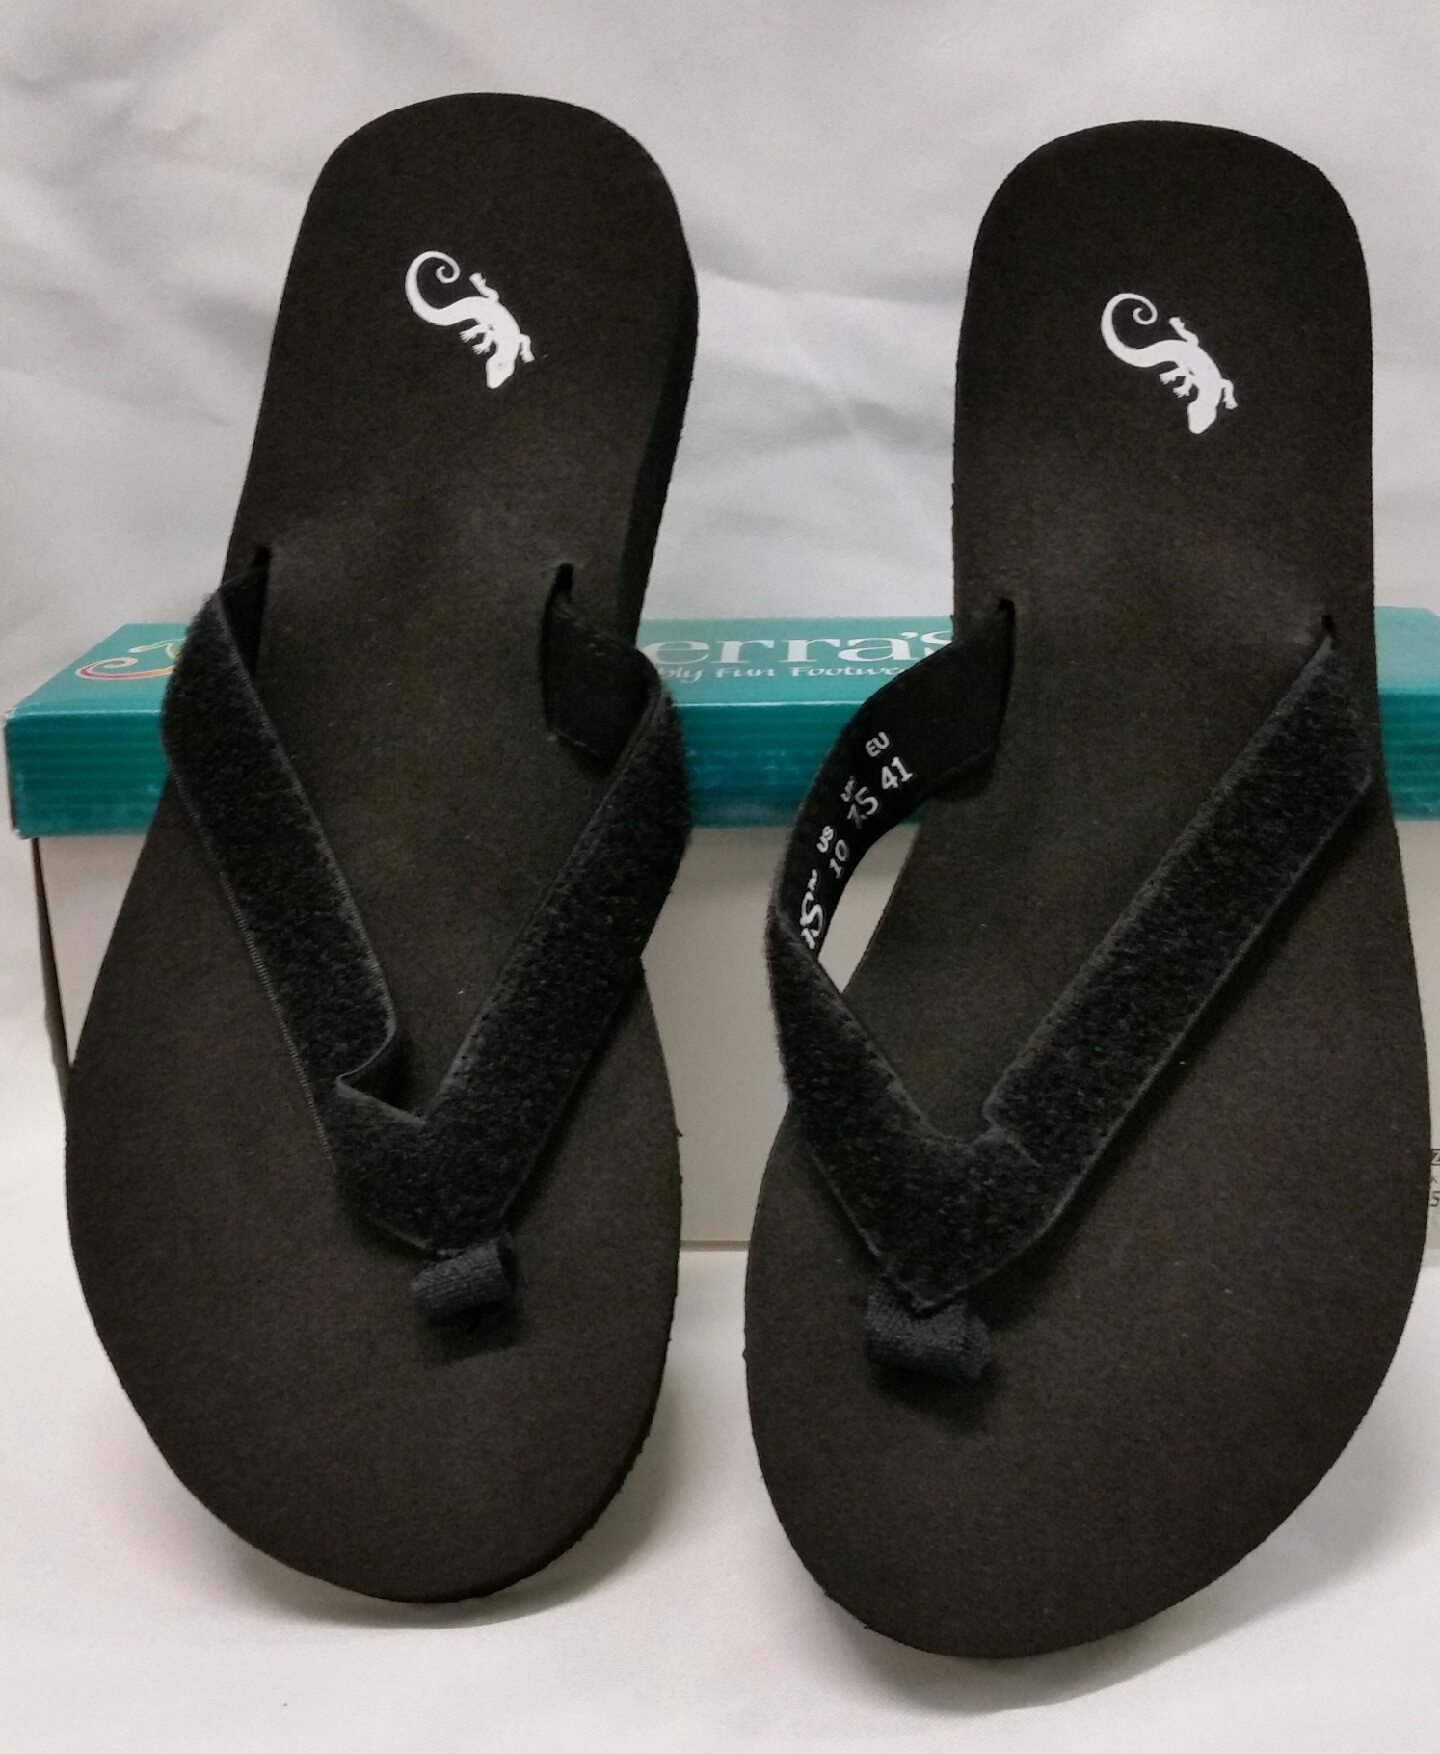 sierra's flip flops with interchangeable straps